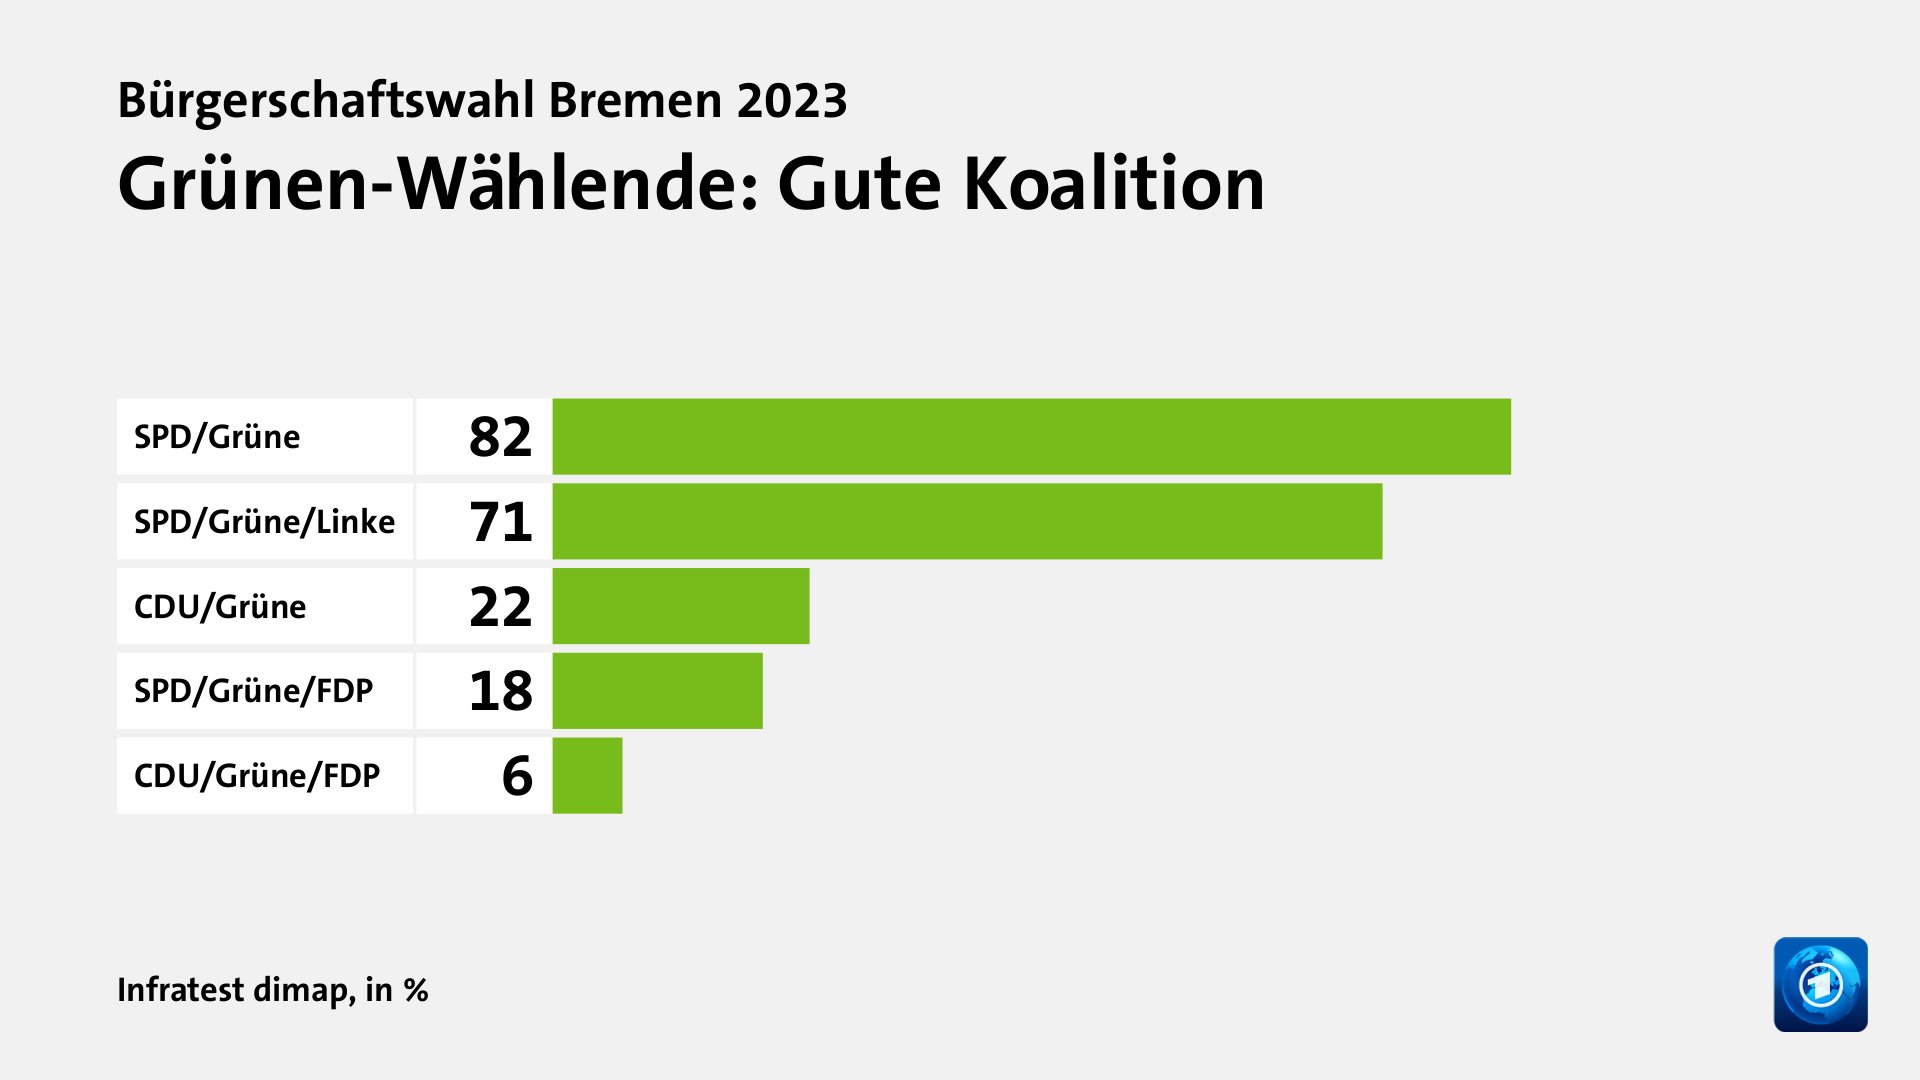 Grünen-Wählende: Gute Koalition, in %: SPD/Grüne 82, SPD/Grüne/Linke 71, CDU/Grüne 22, SPD/Grüne/FDP 18, CDU/Grüne/FDP 6, Quelle: Infratest dimap